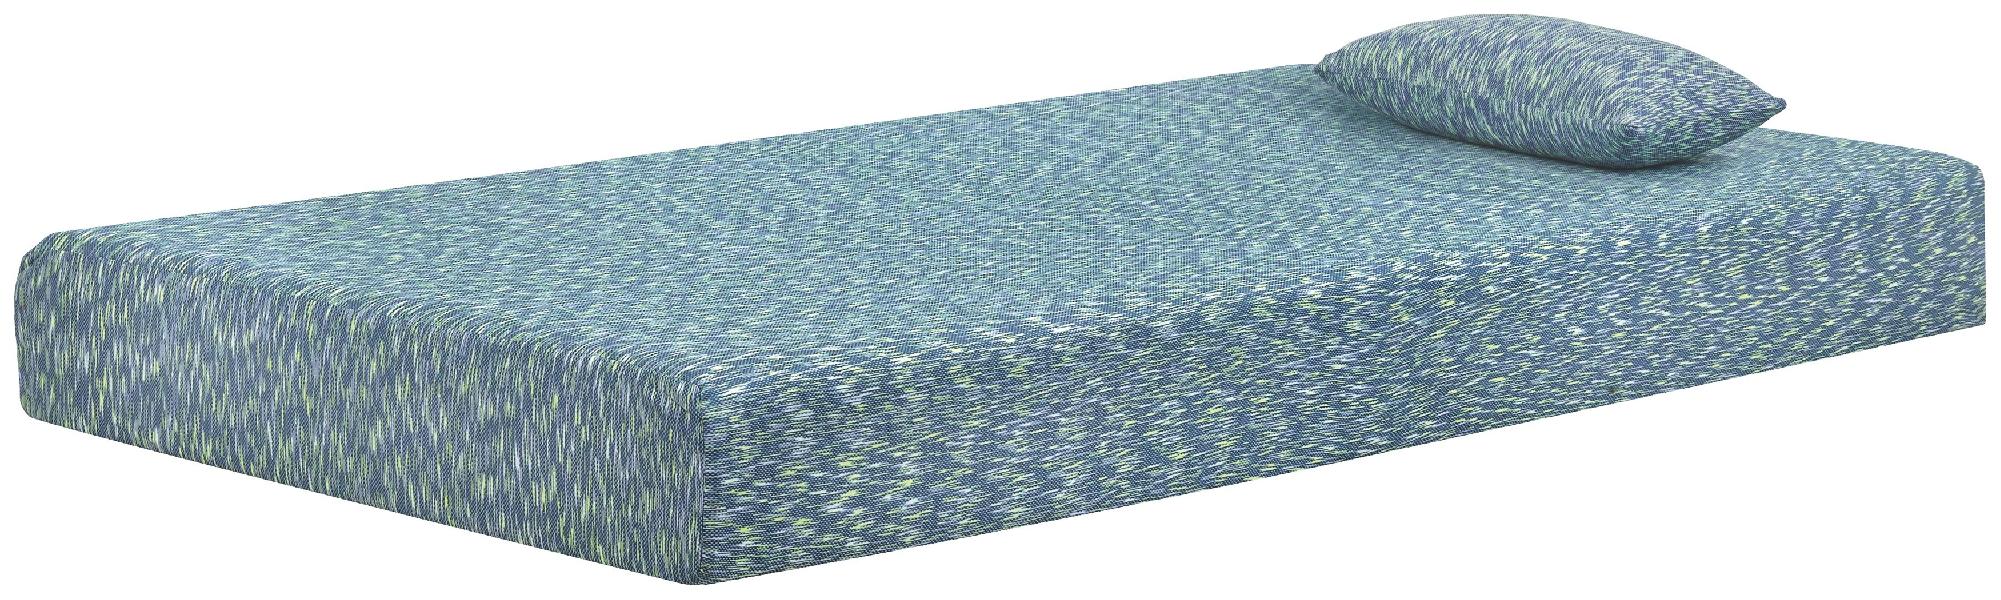 Image of Ikidz - Blue - Twin Mattress And Pillow Set of 2